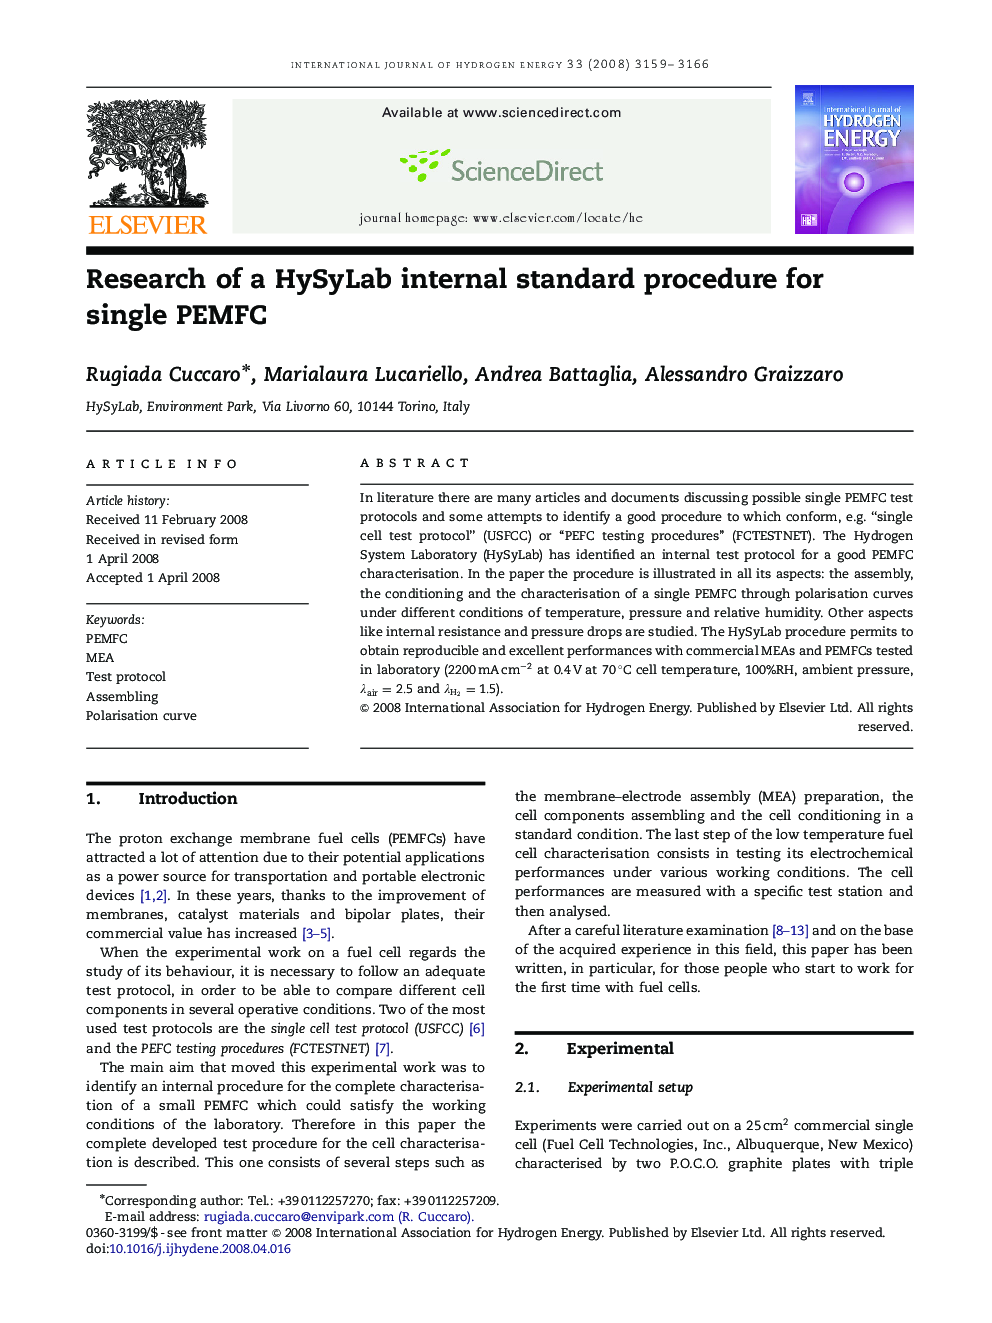 Research of a HySyLab internal standard procedure for single PEMFC